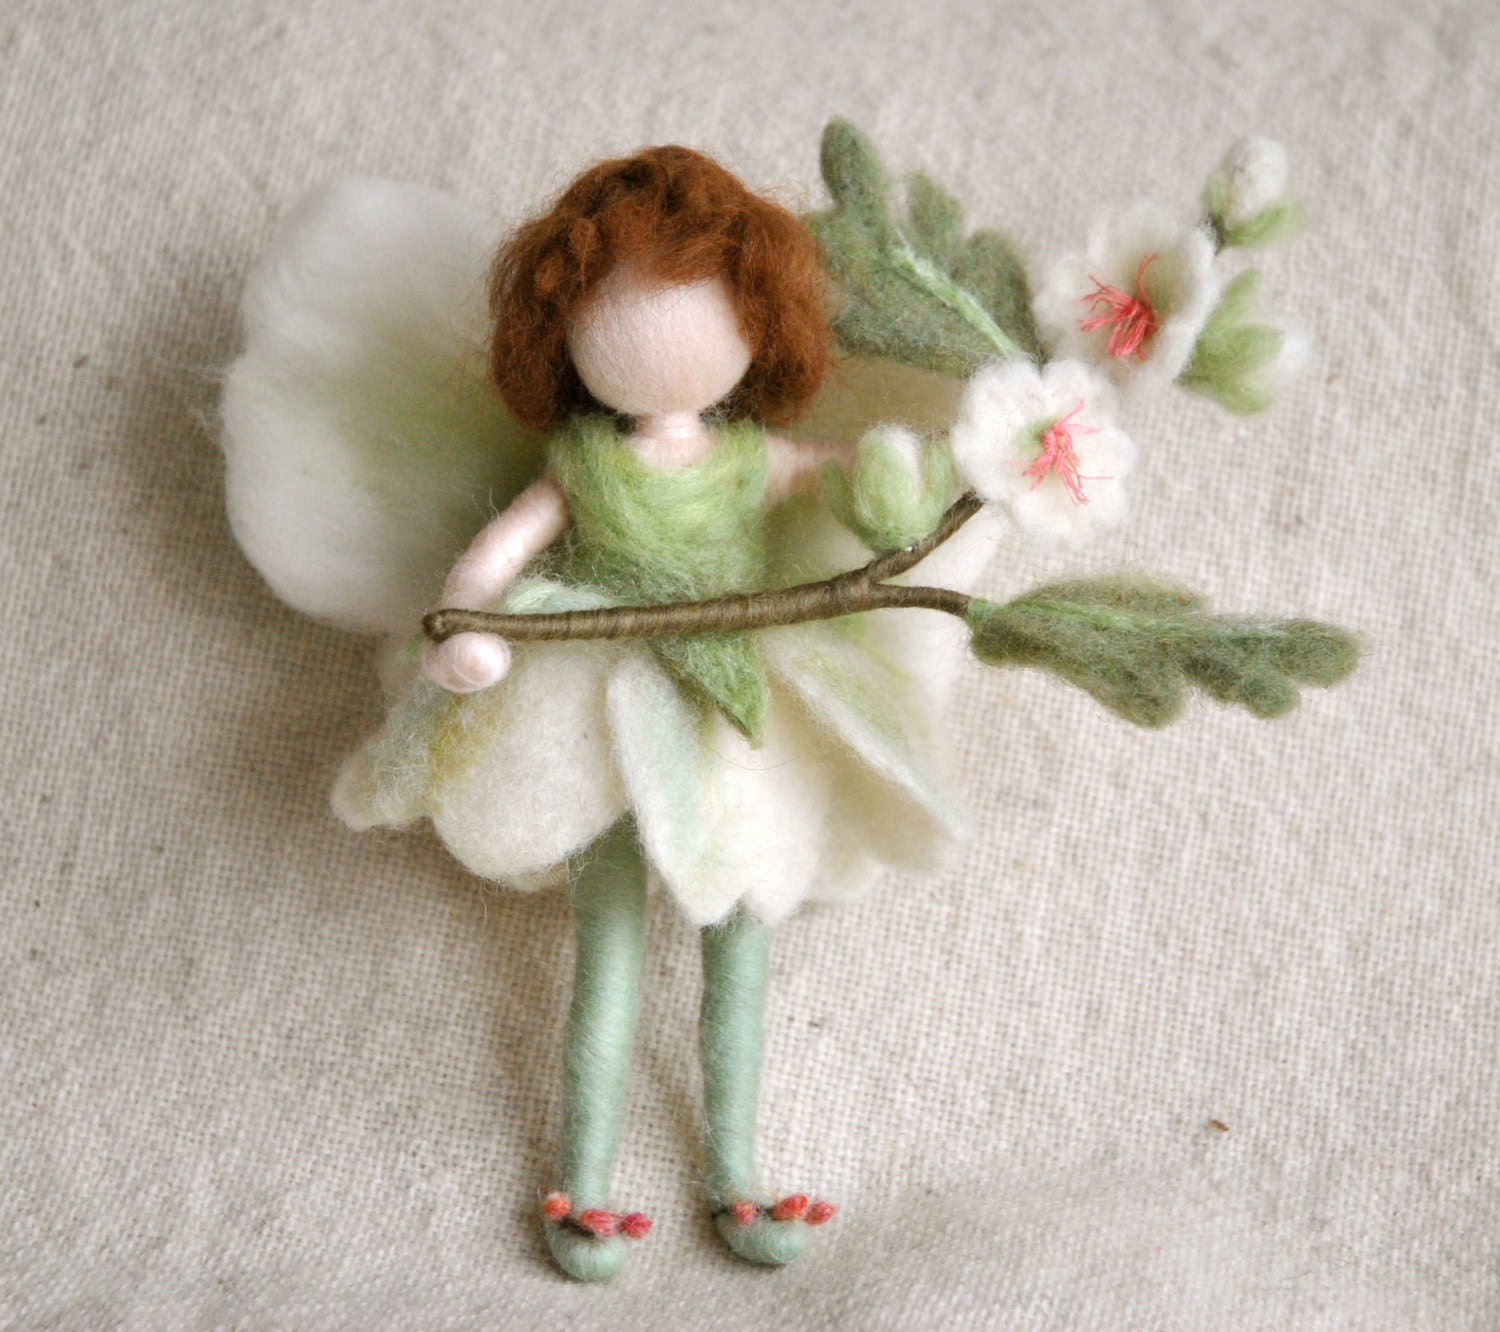 Waldorf Flower Fairy,home decoration nature,spring,fiber arts office,classroom,gift,small,handmade,custom,nature table